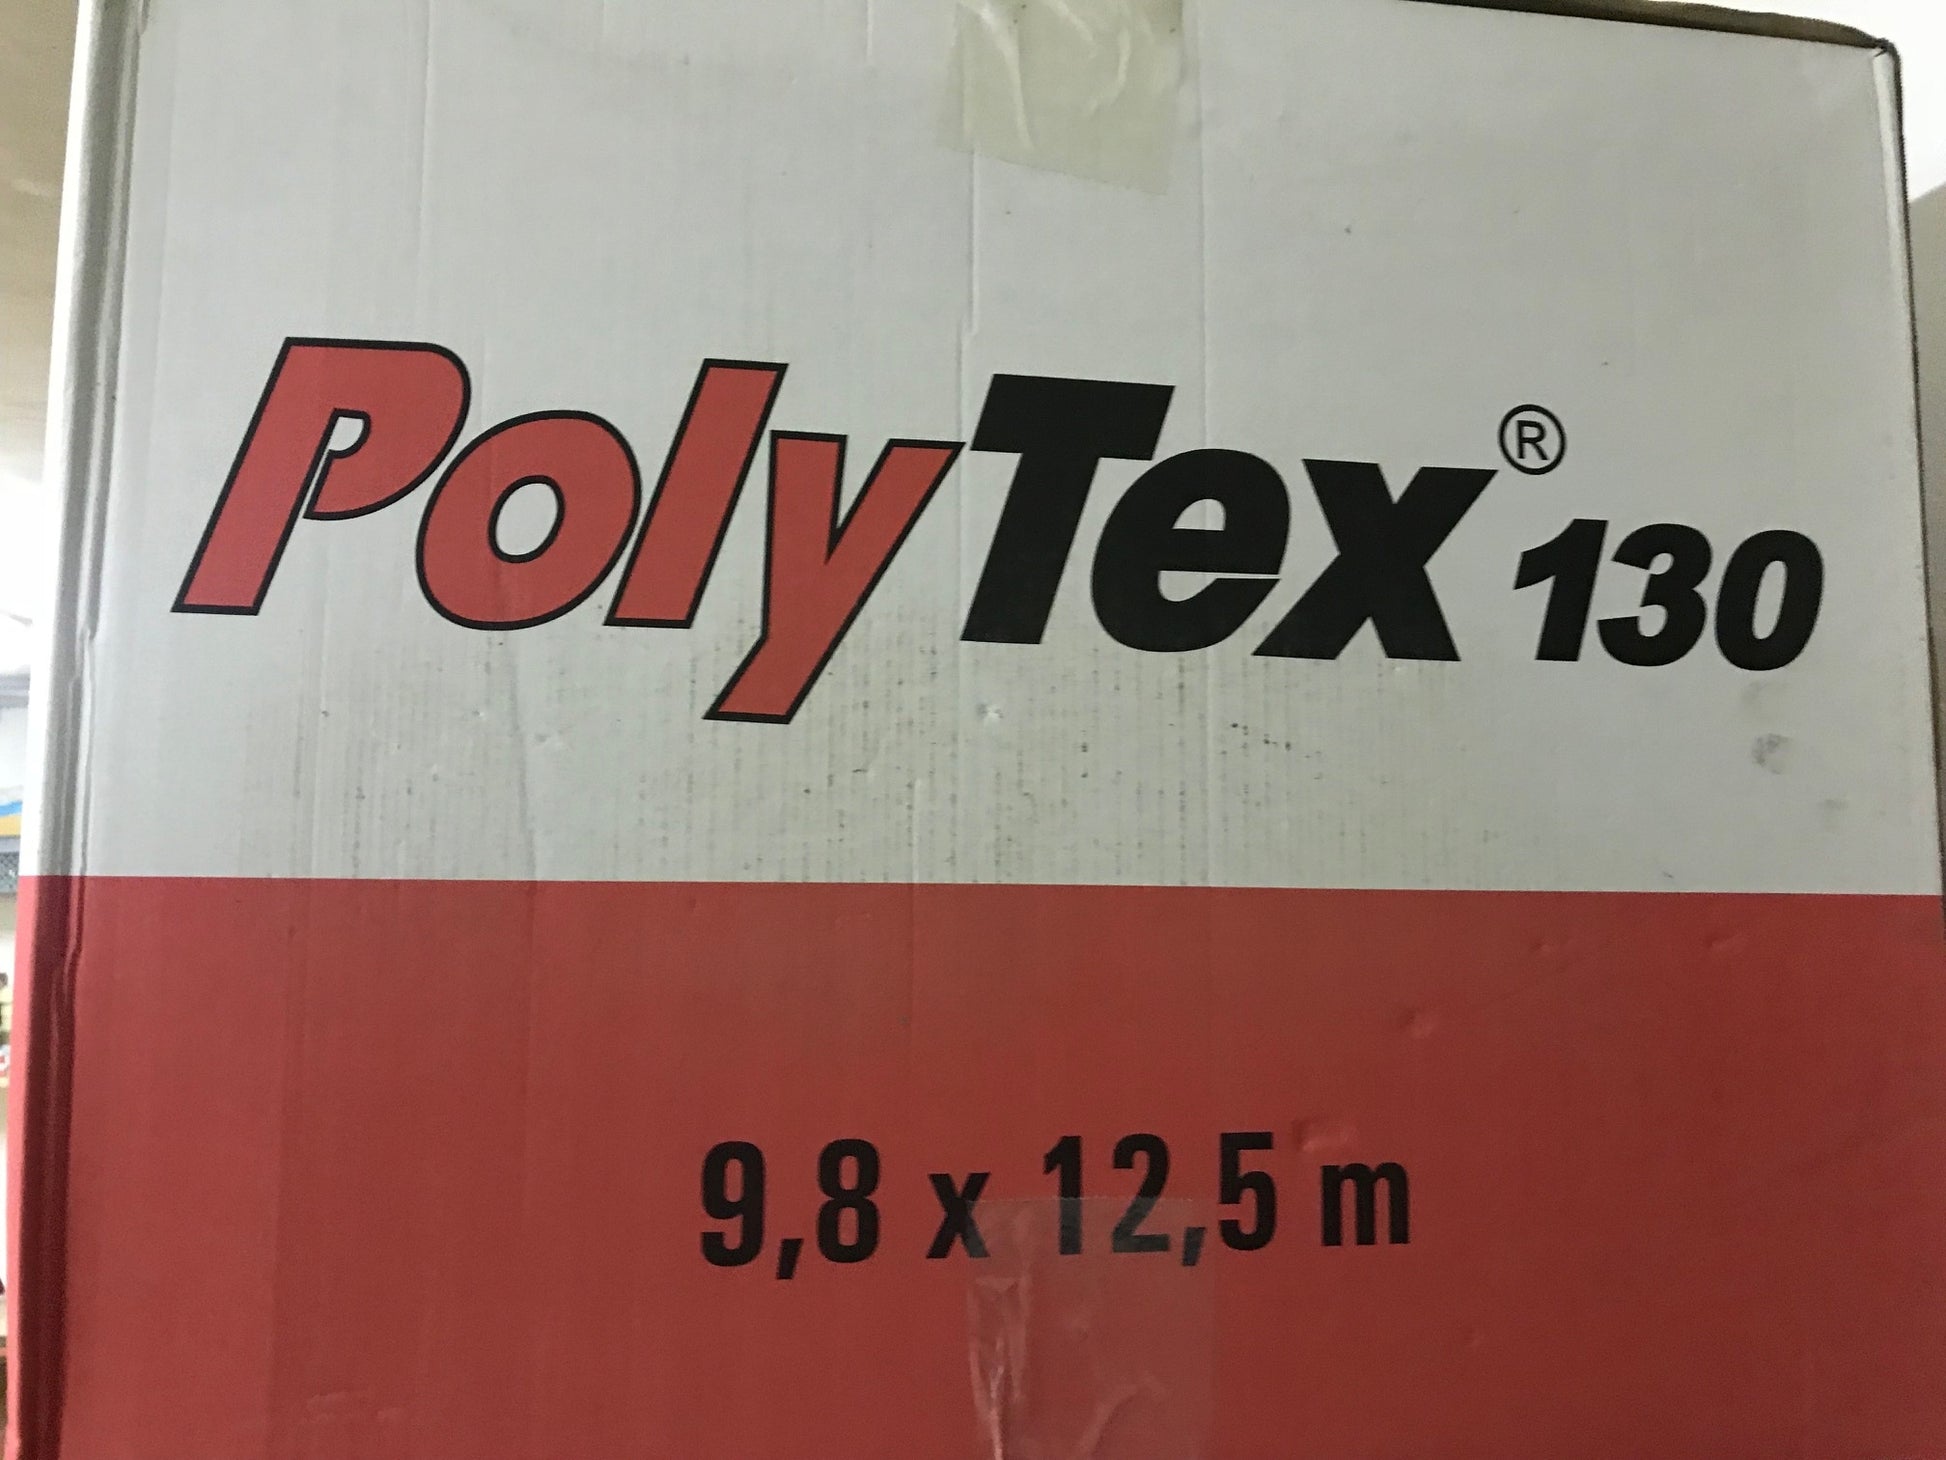 POLYTEX 130